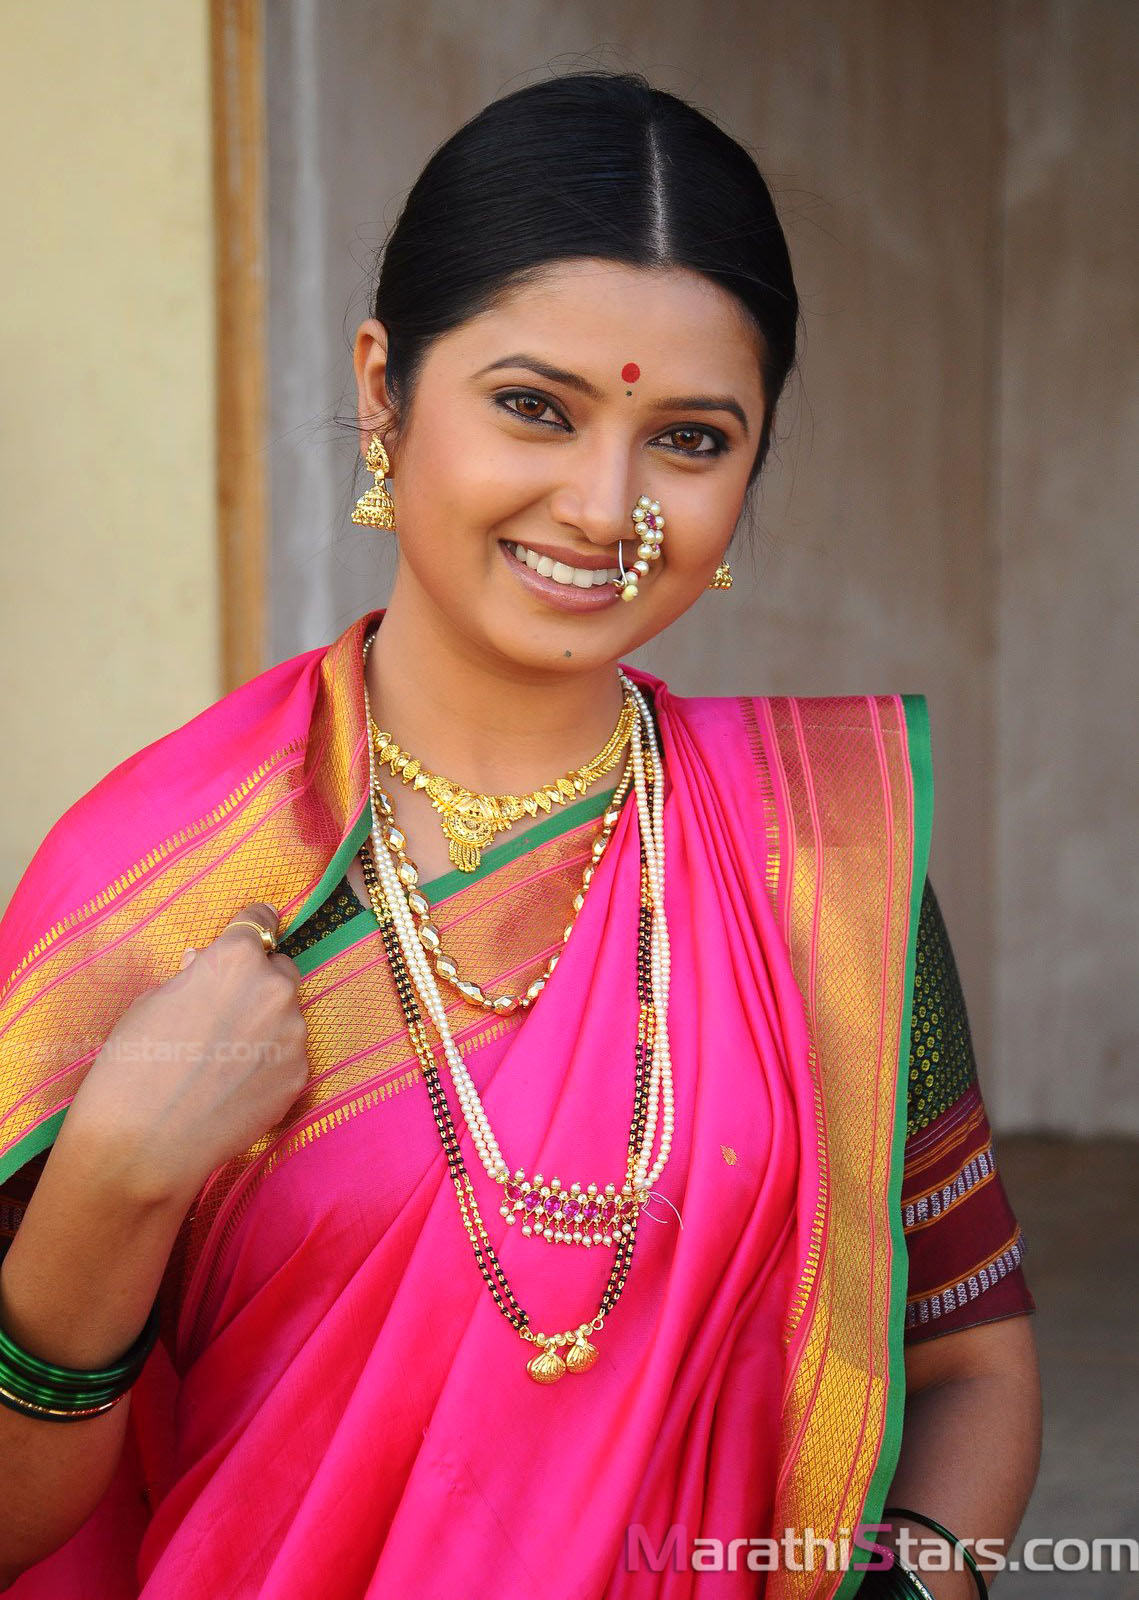 Ketaki Mategaonkar Marathi Actress Photos Biography Wiki 